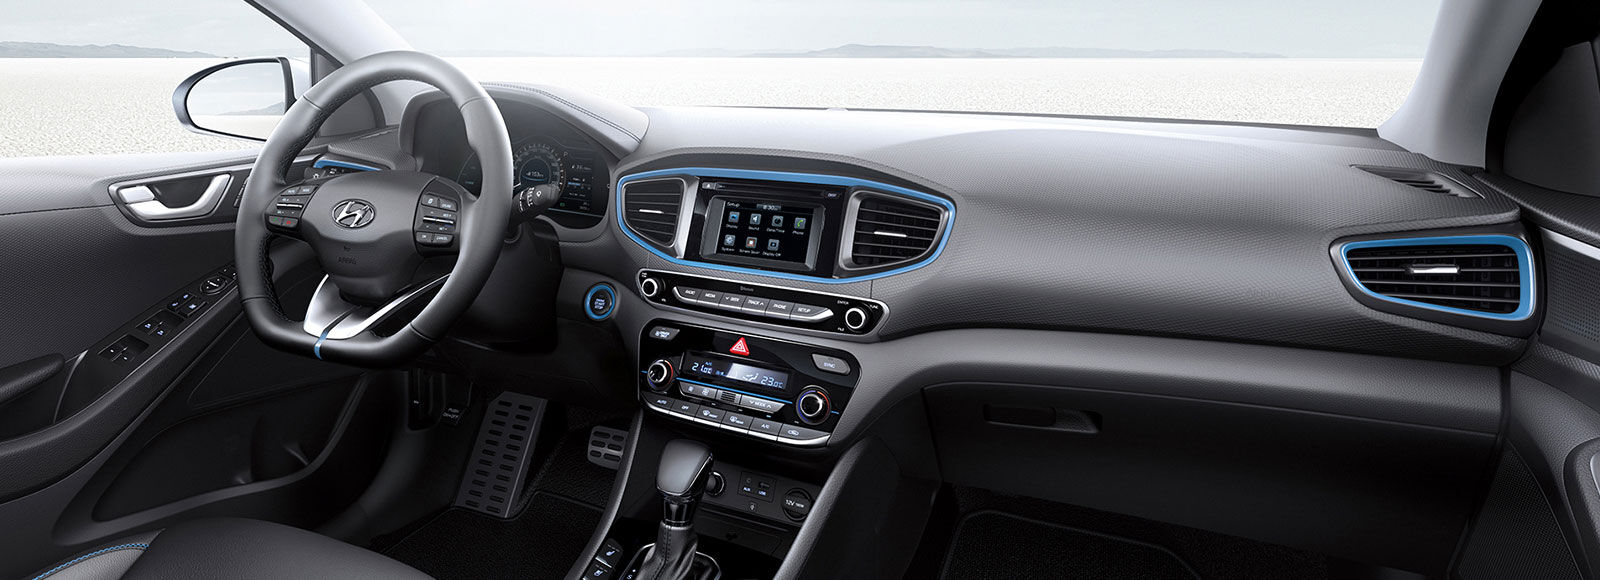 Hyundai IONIQ Hybrid interior - Find a | Hyundai Asia&Pacific